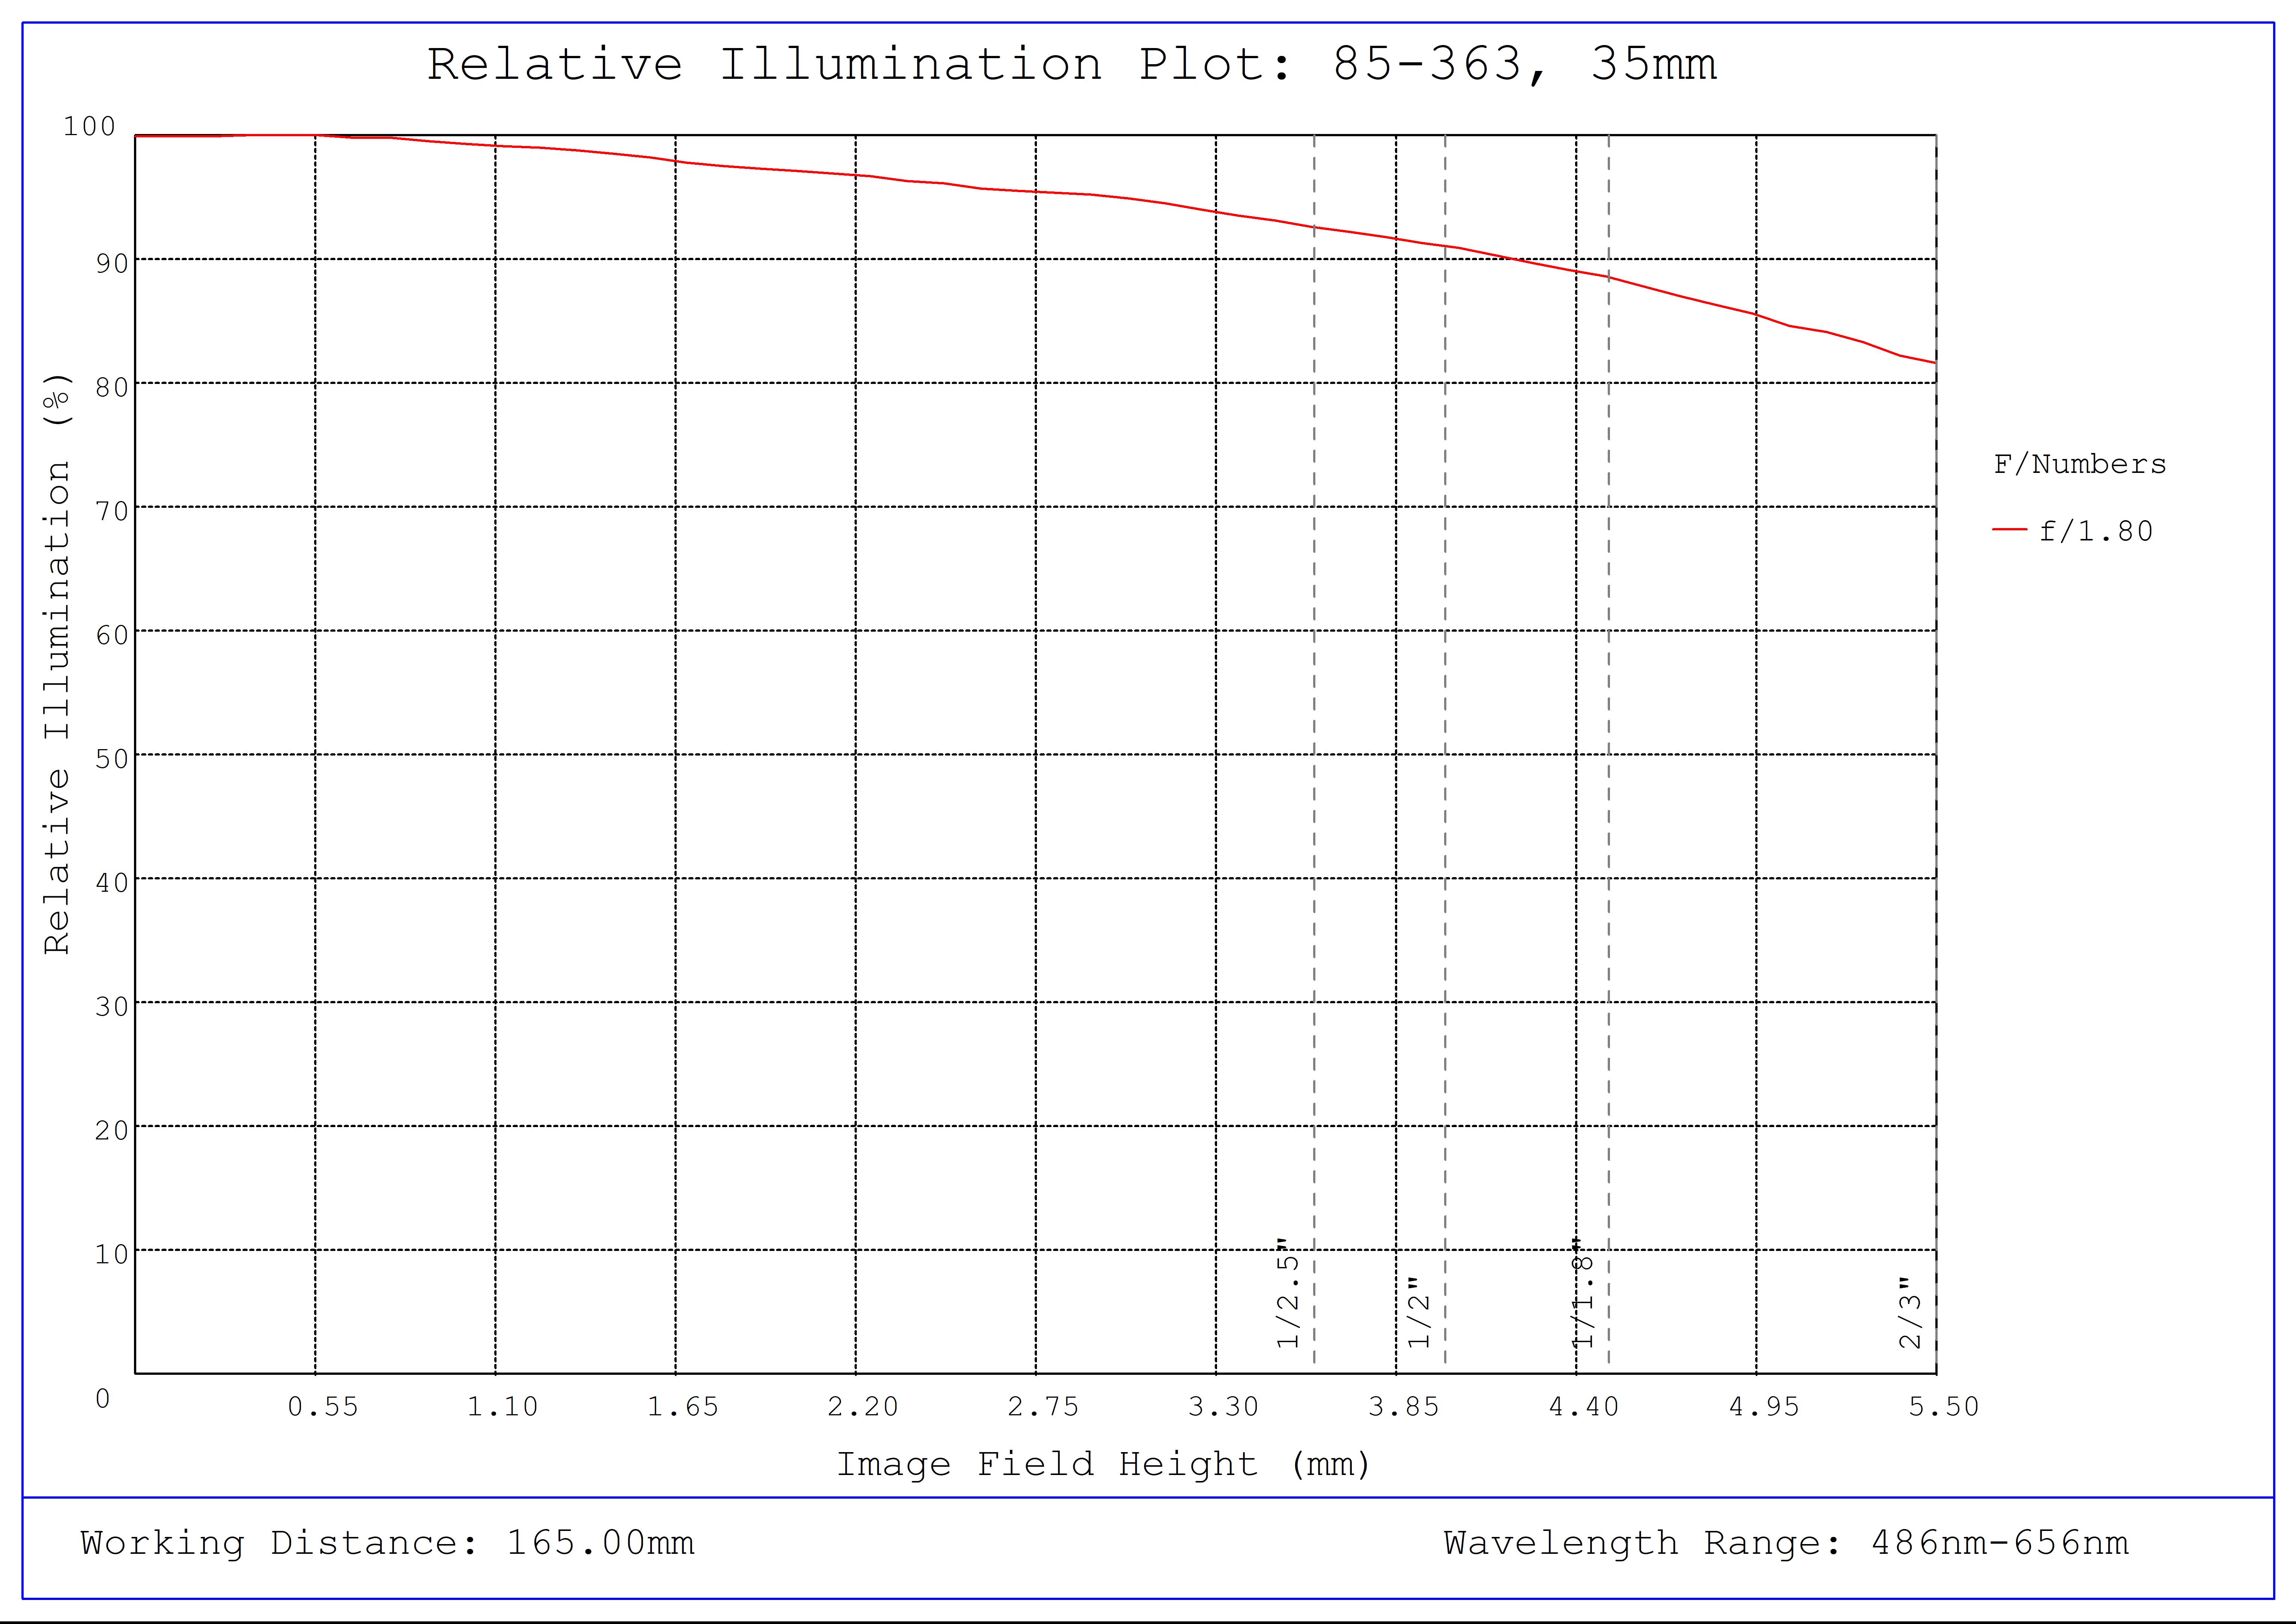 #85-363, 35mm, f/1.8 Ci Series Fixed Focal Length Lens, Relative Illumination Plot